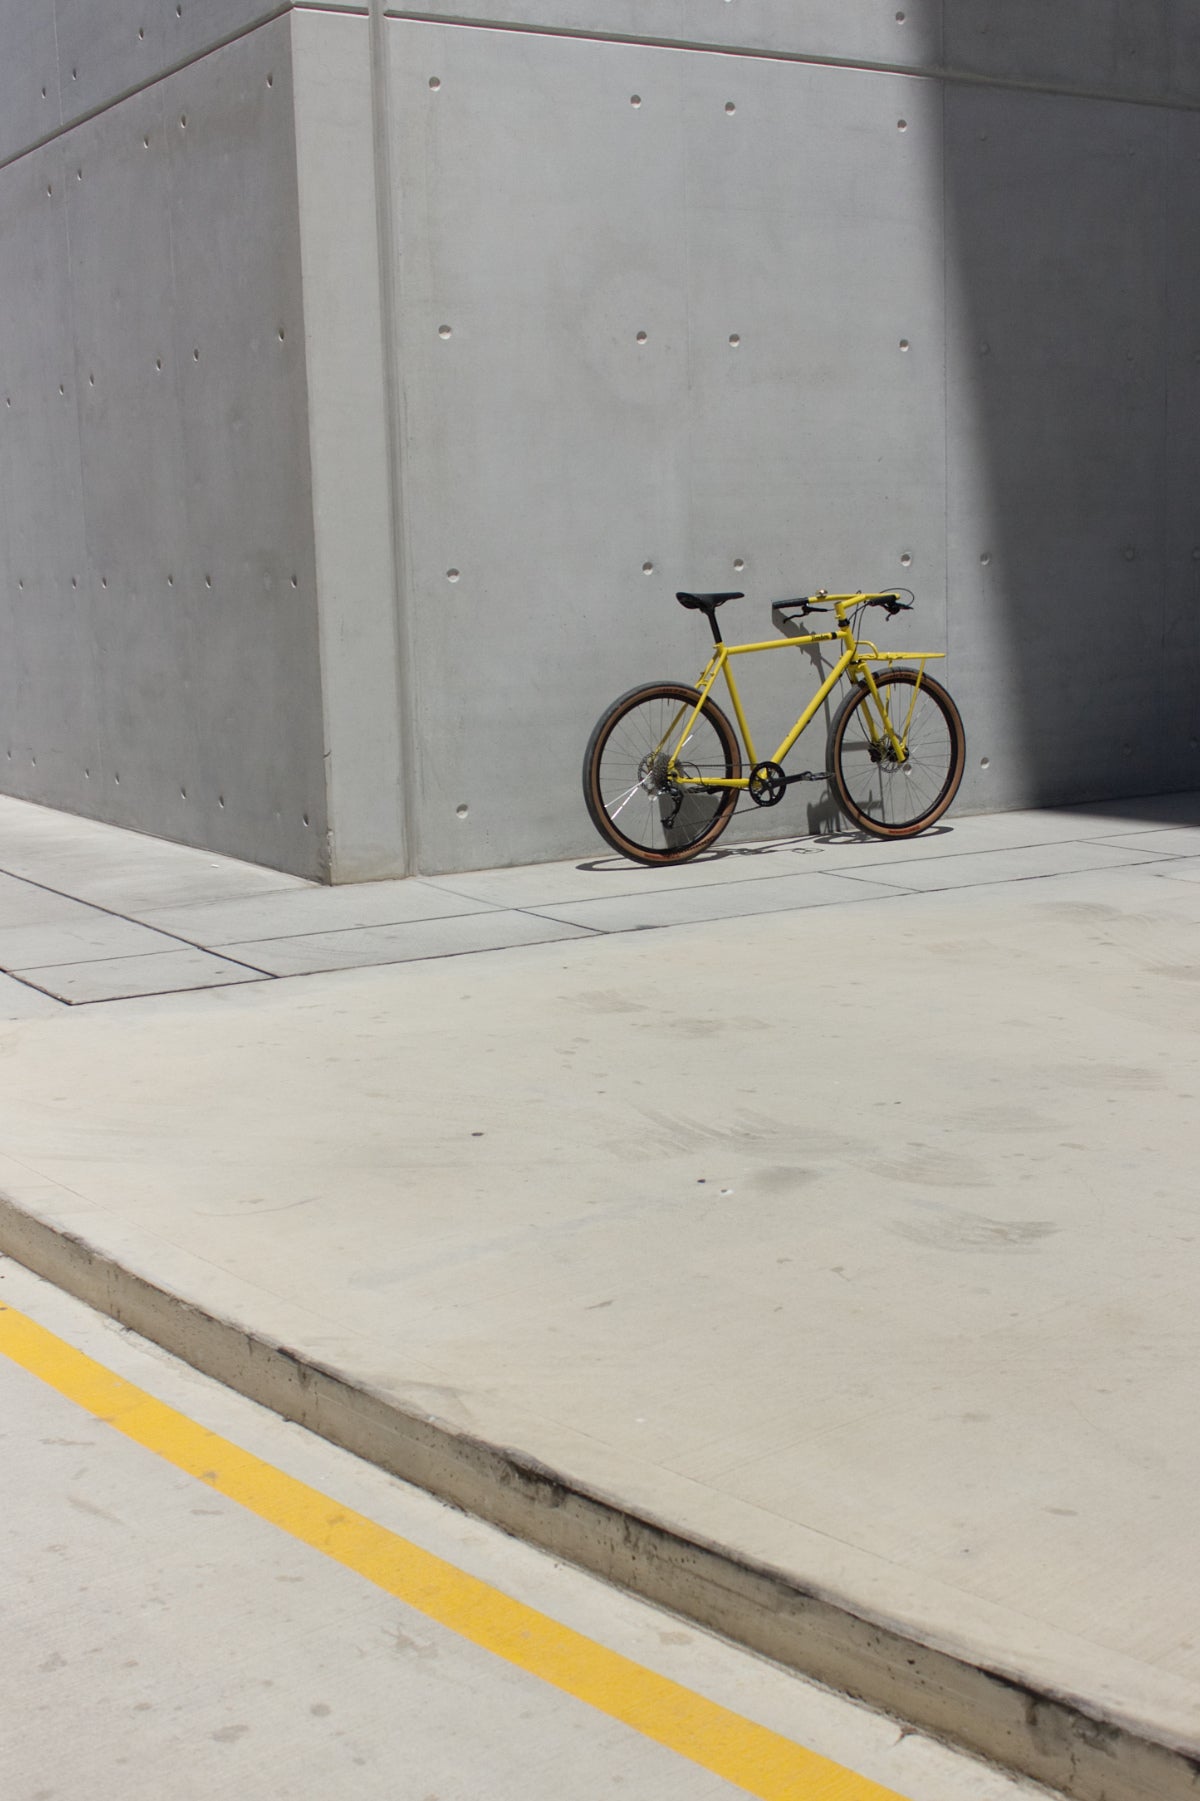 Donhou utility bike mustard yellow against wall